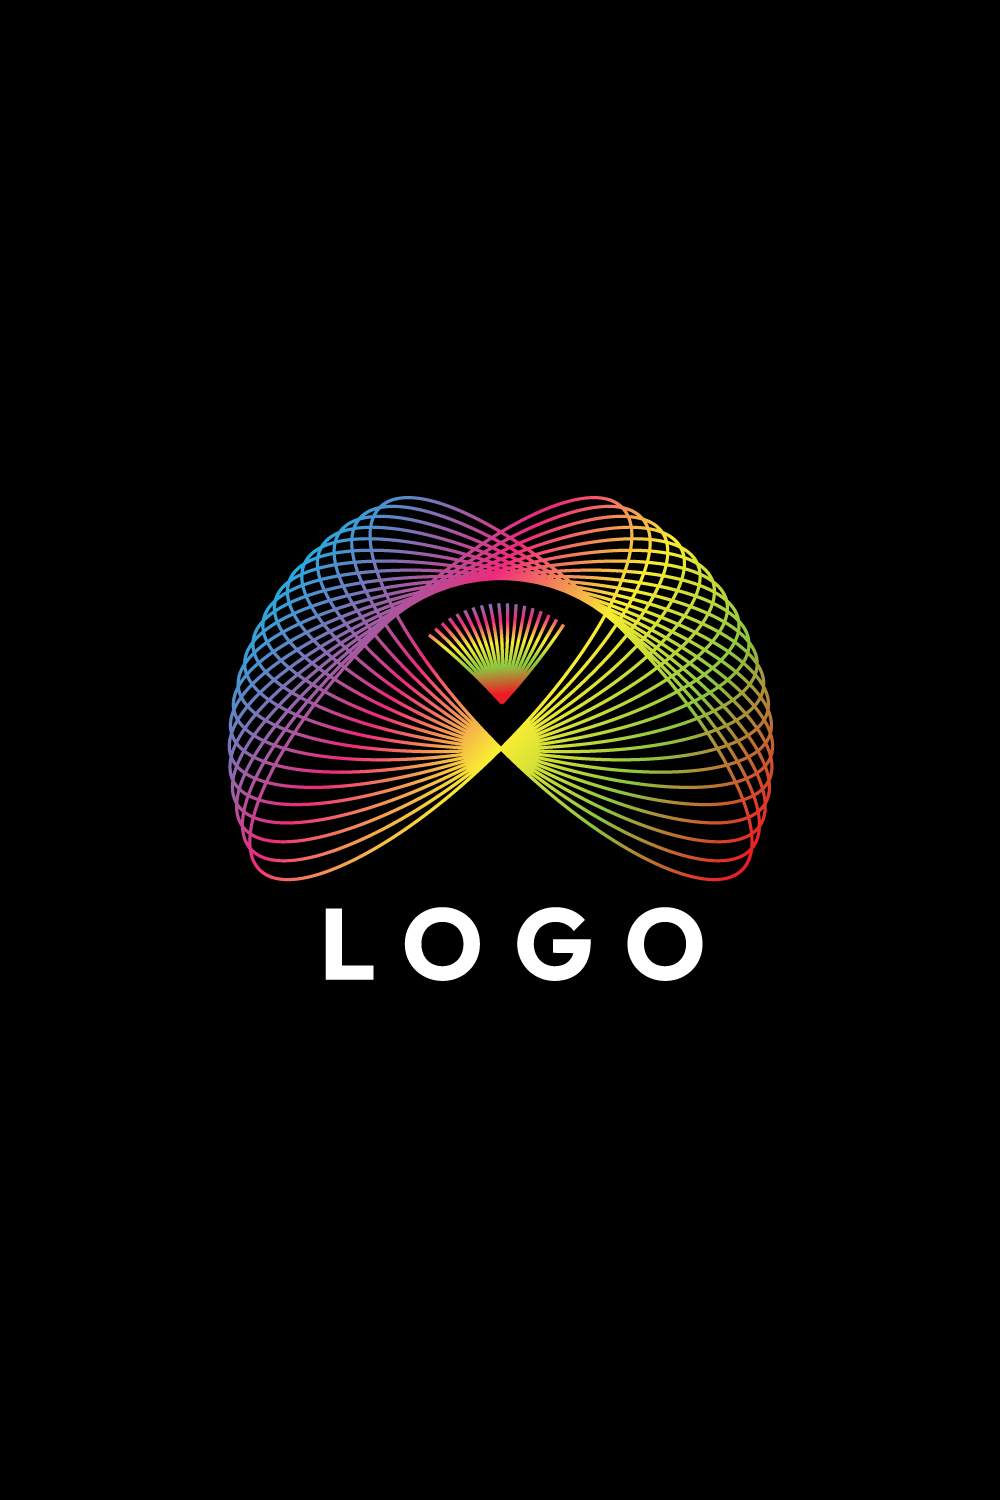 Sleek Line Art Logo Designs: Elevate Your Brand with Master Bundles pinterest preview image.